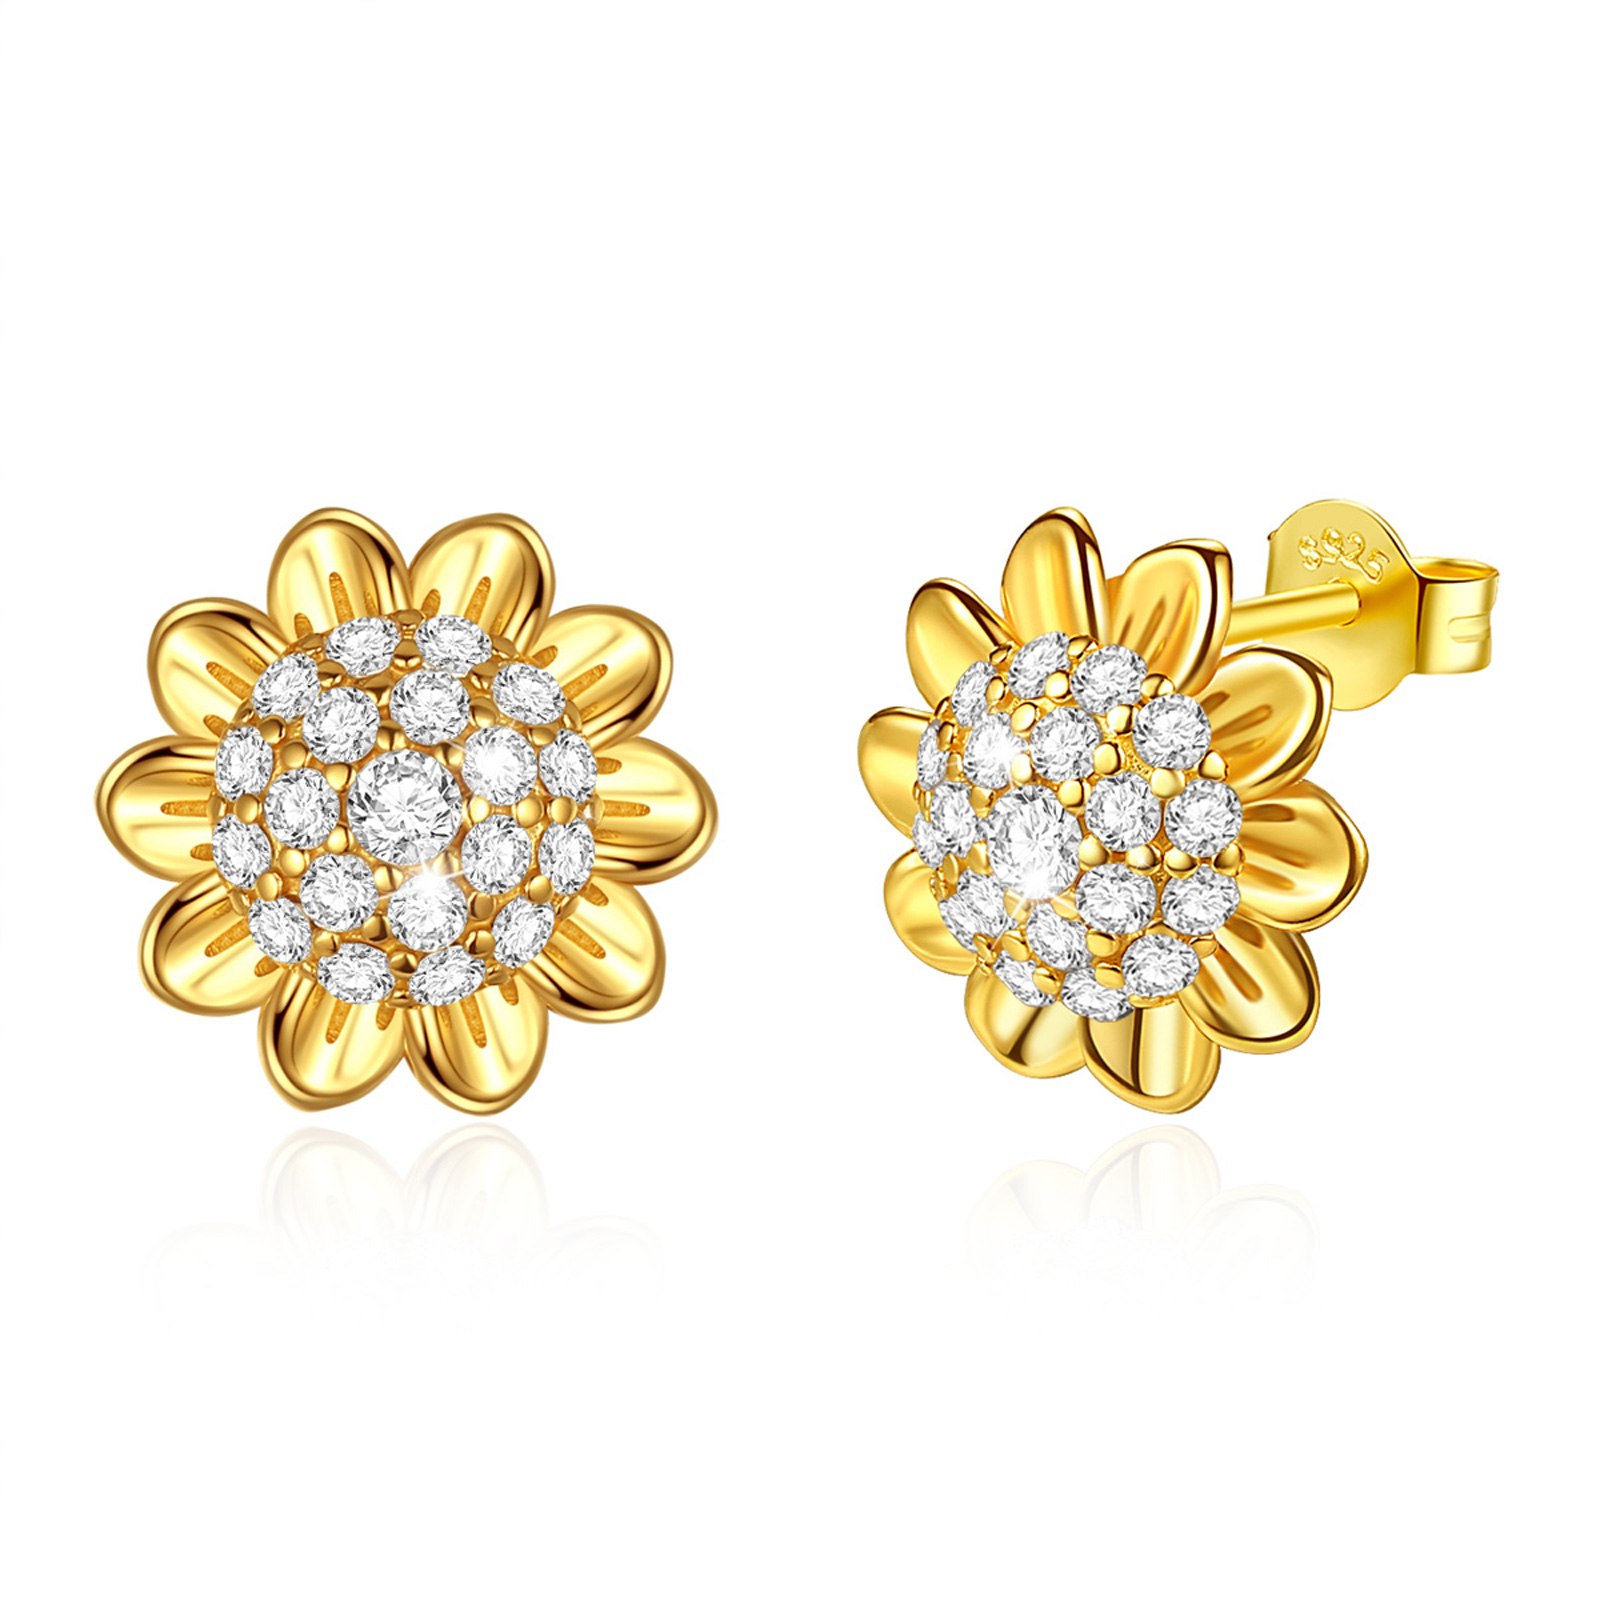 Merryshine Jewelry S925 Sterling Silver Add Cubic zirconia Sunflower Gold Earrings For Women